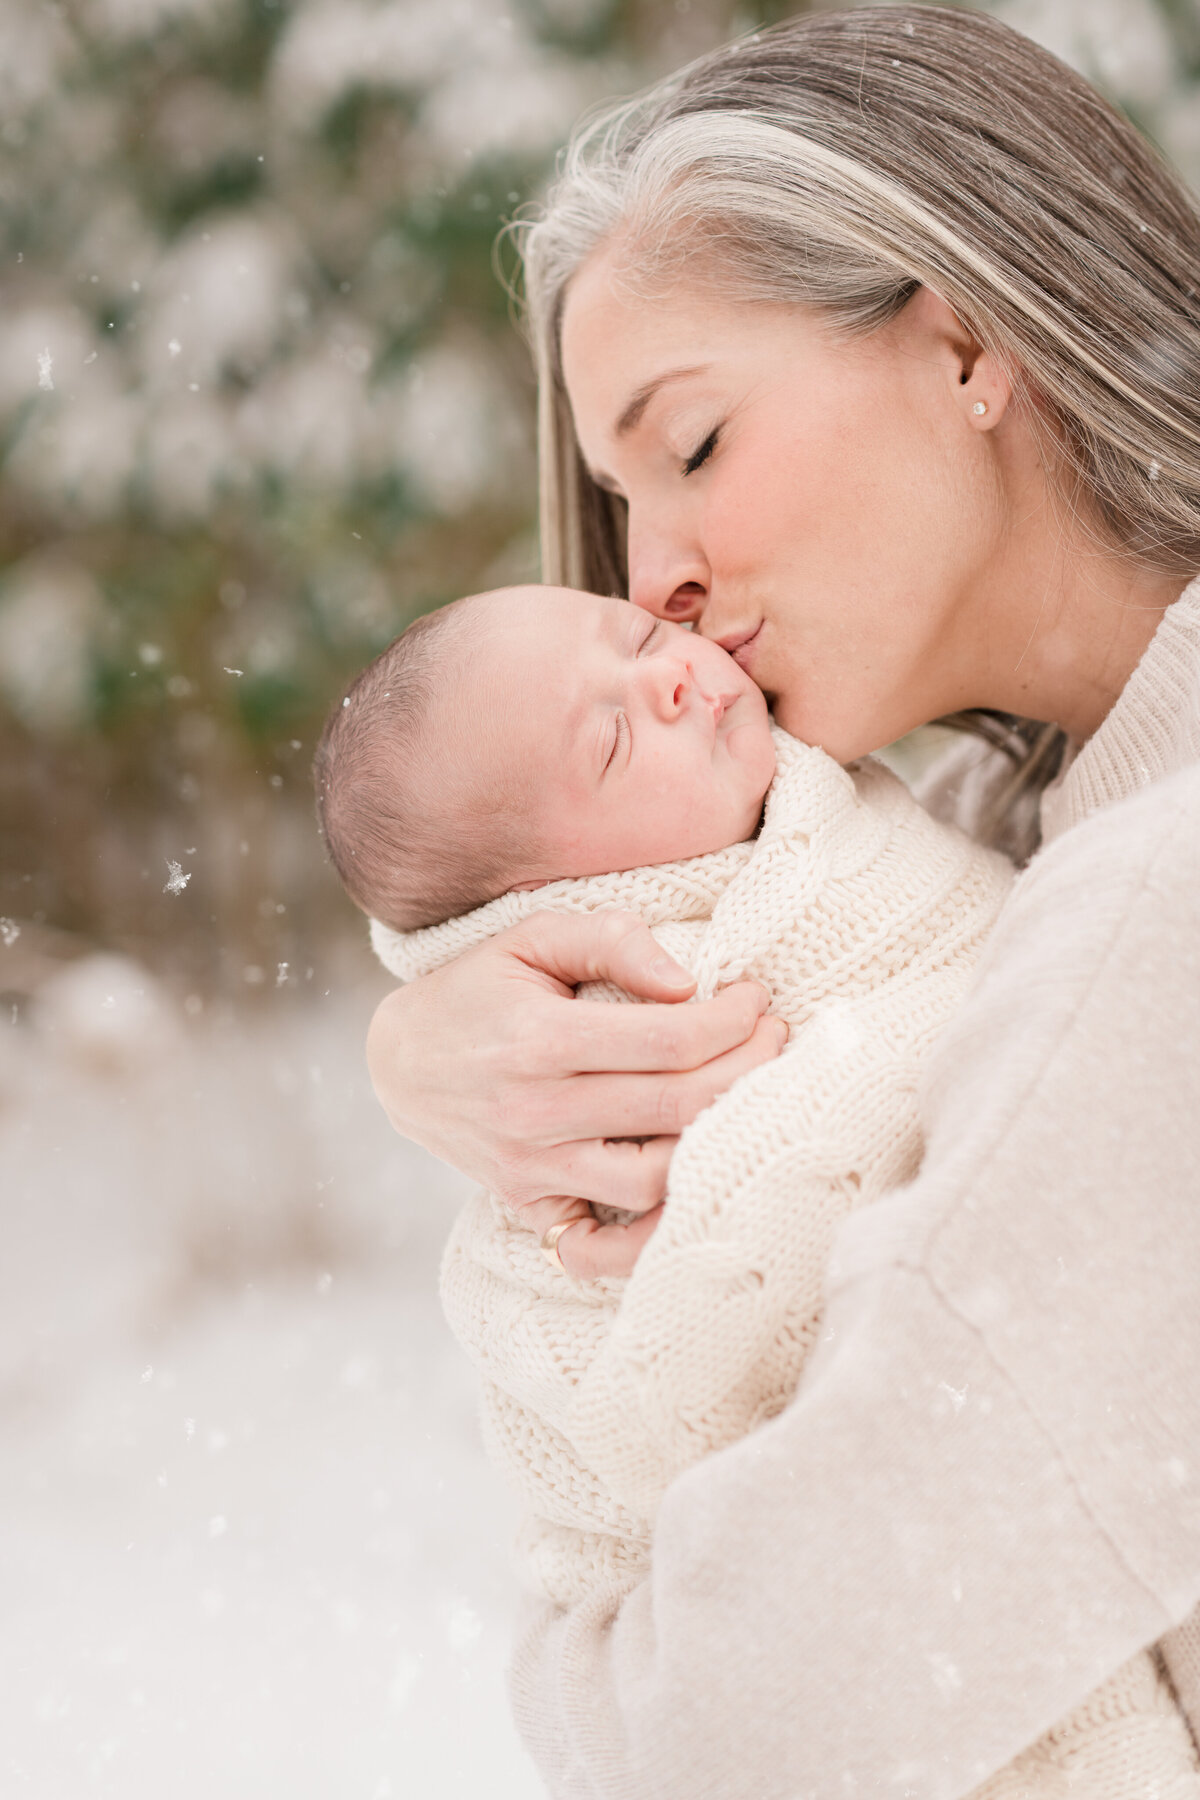 Boston-family-maternity-photographer-winter-newborn-snow-session-1-2